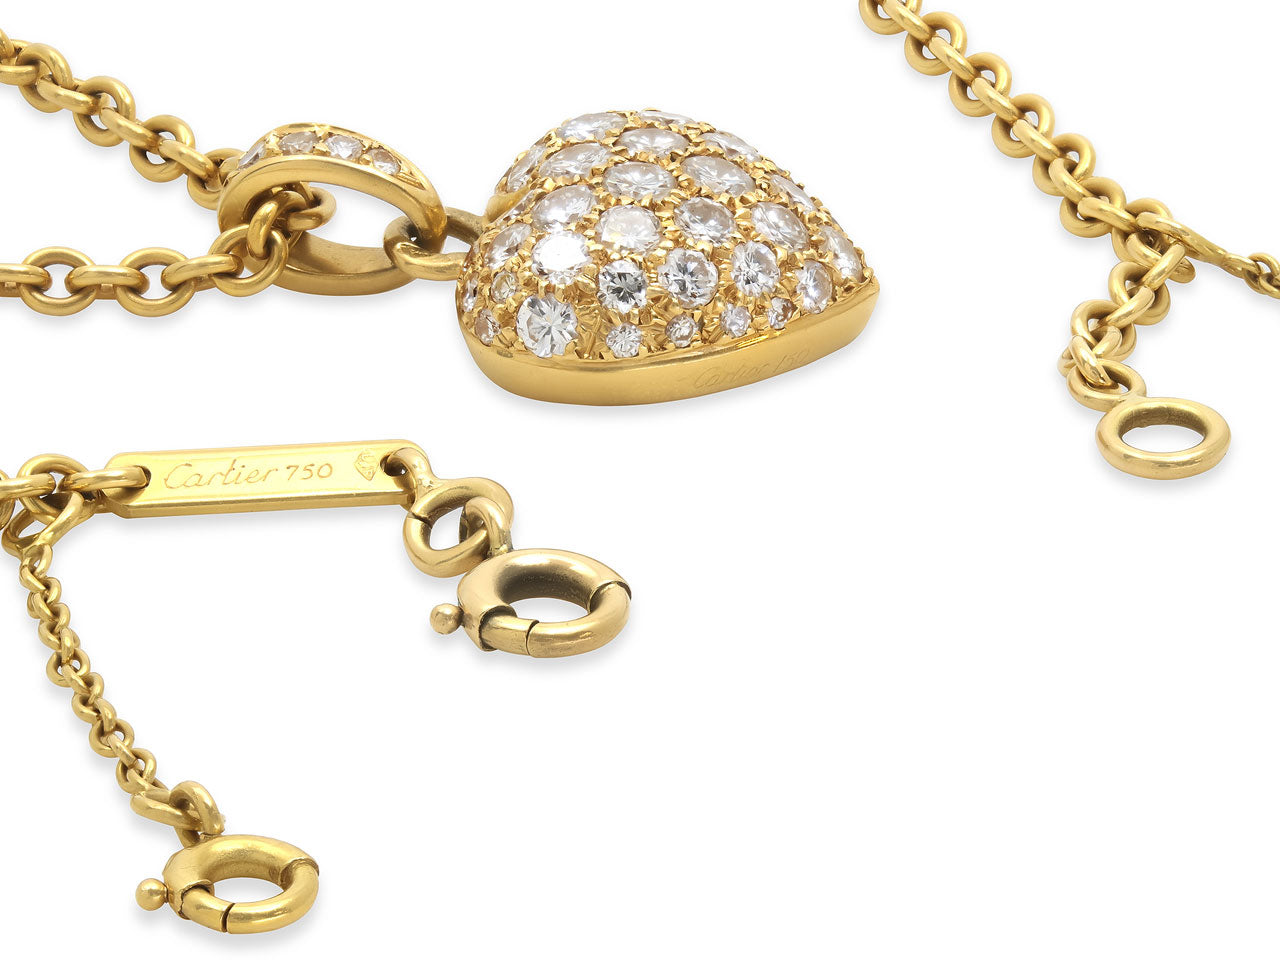 Cartier Diamond Heart Pendant in 18K Gold